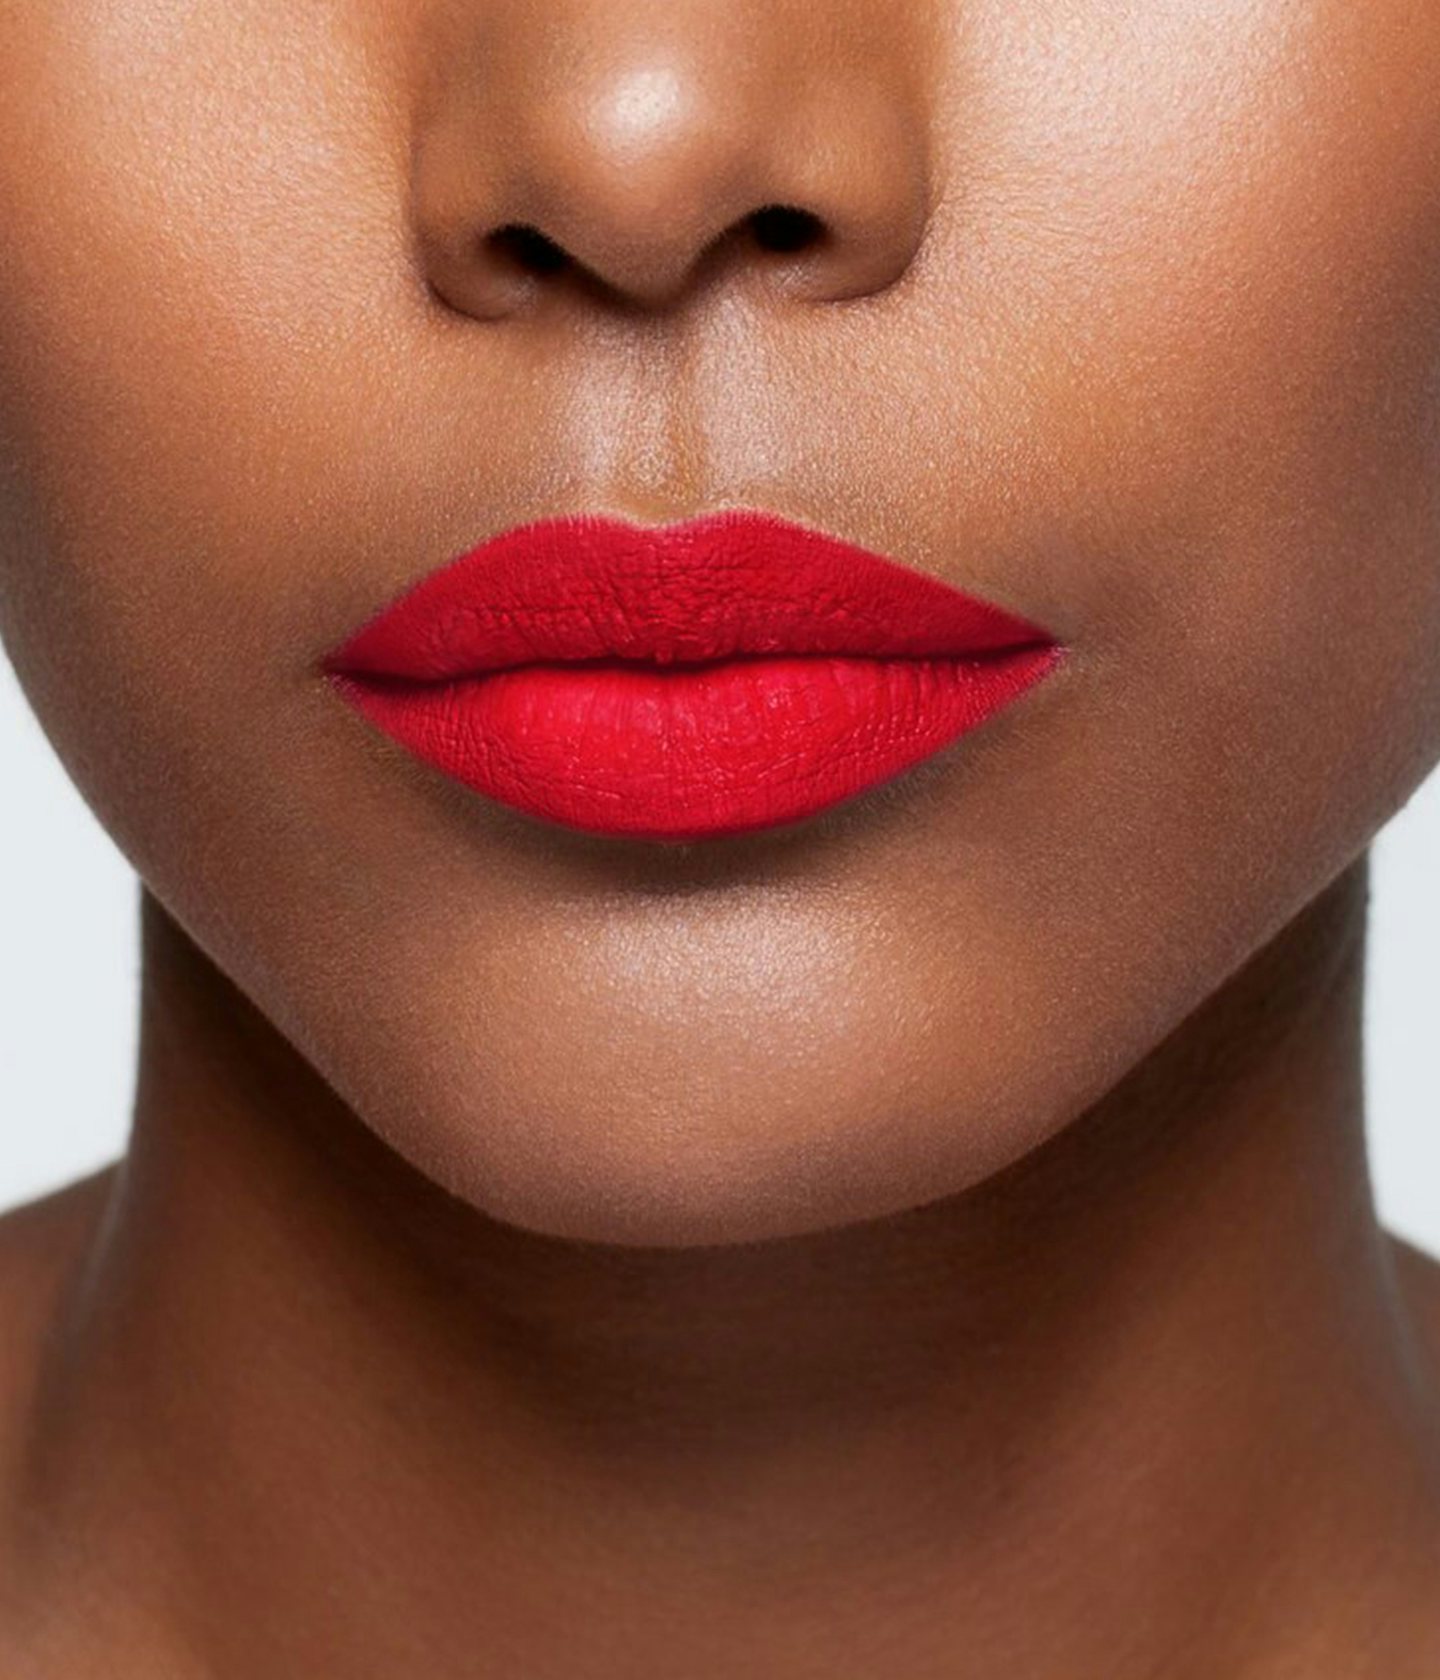 La bouche rouge 70s America lipstick shade on the lips of a dark skin model